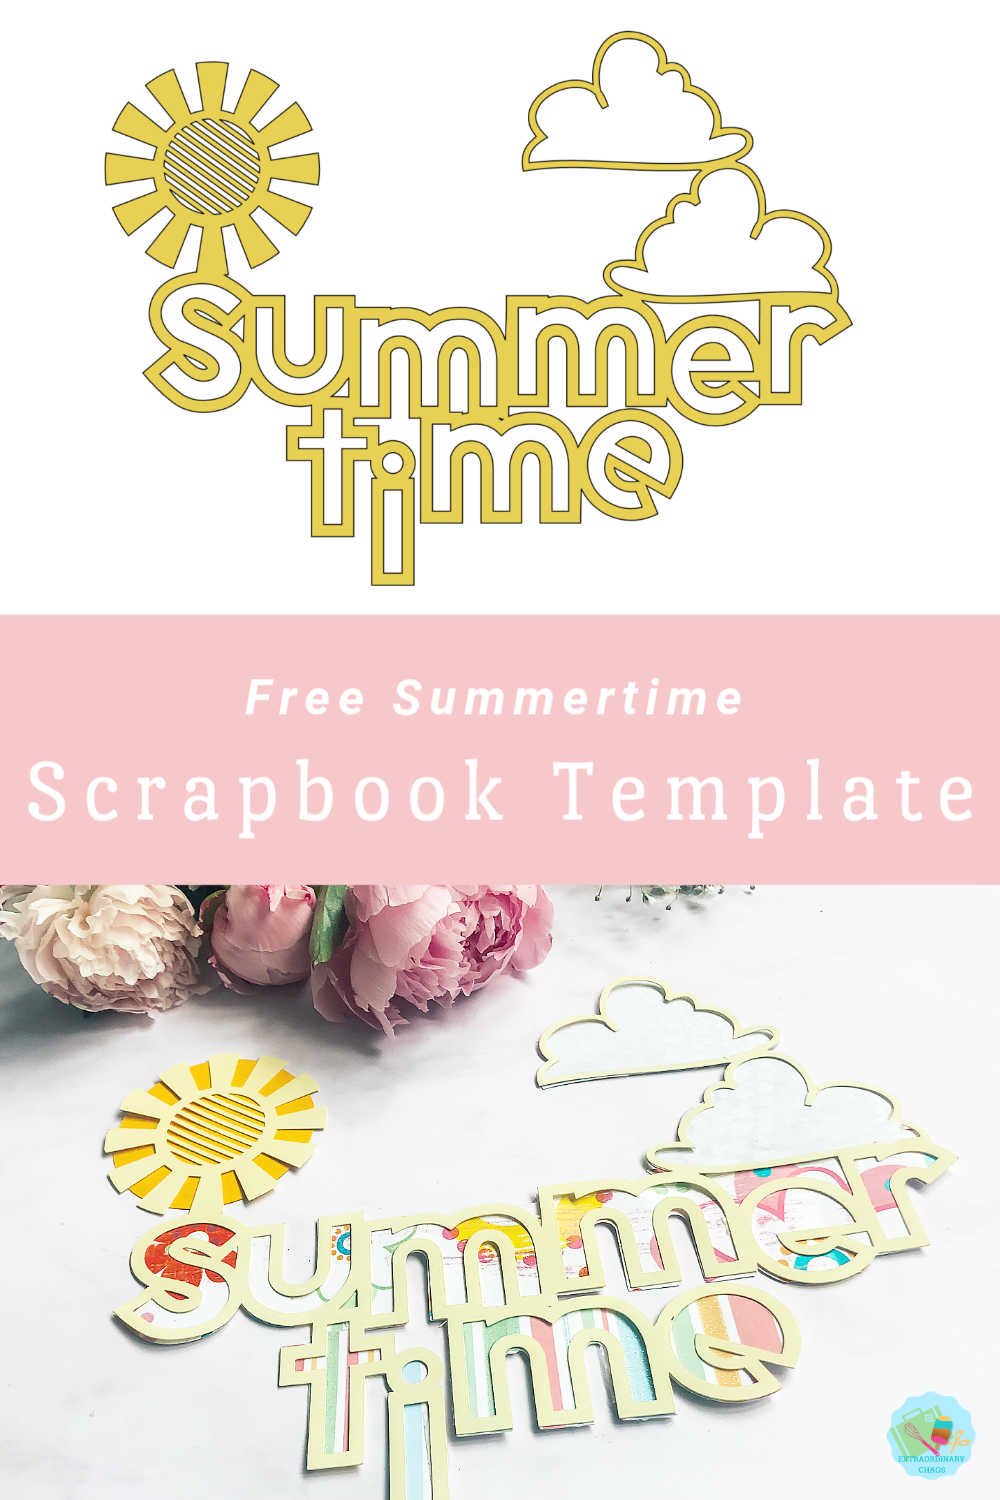 Free summertime scrapbook cut file template for summer scrapbook layouts